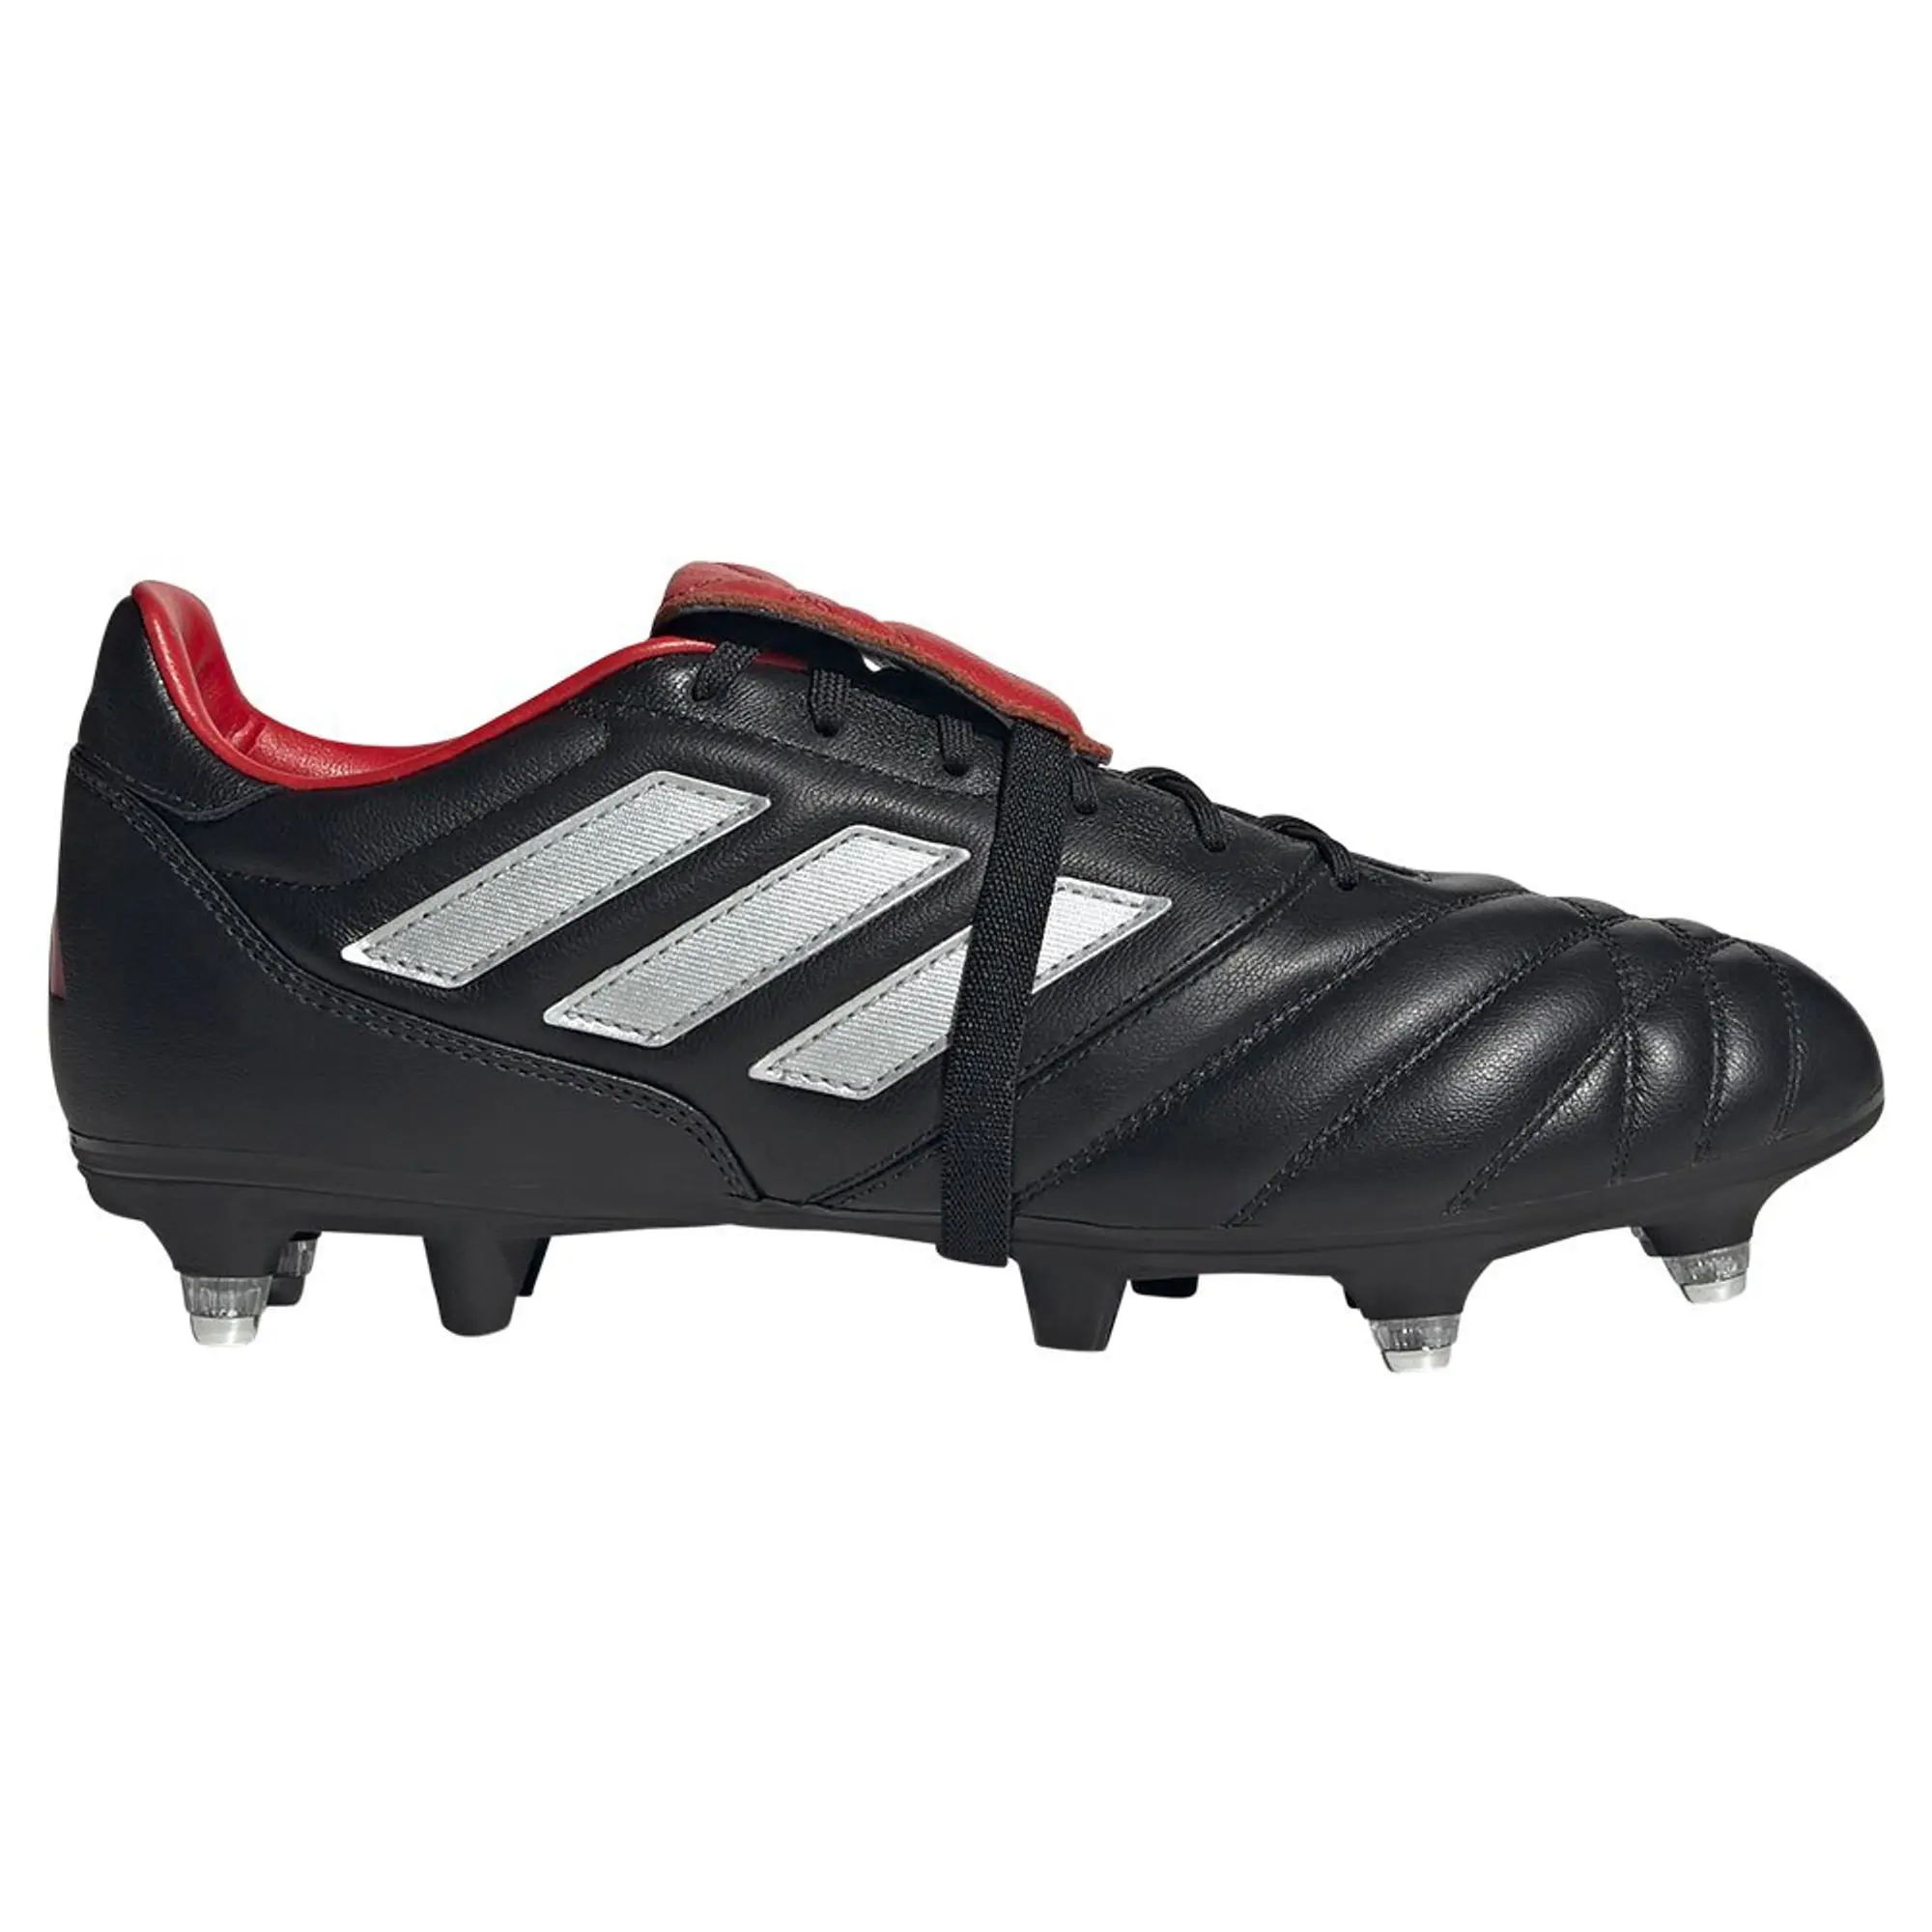 Adidas Copa Gloro SG Adults Football Boots